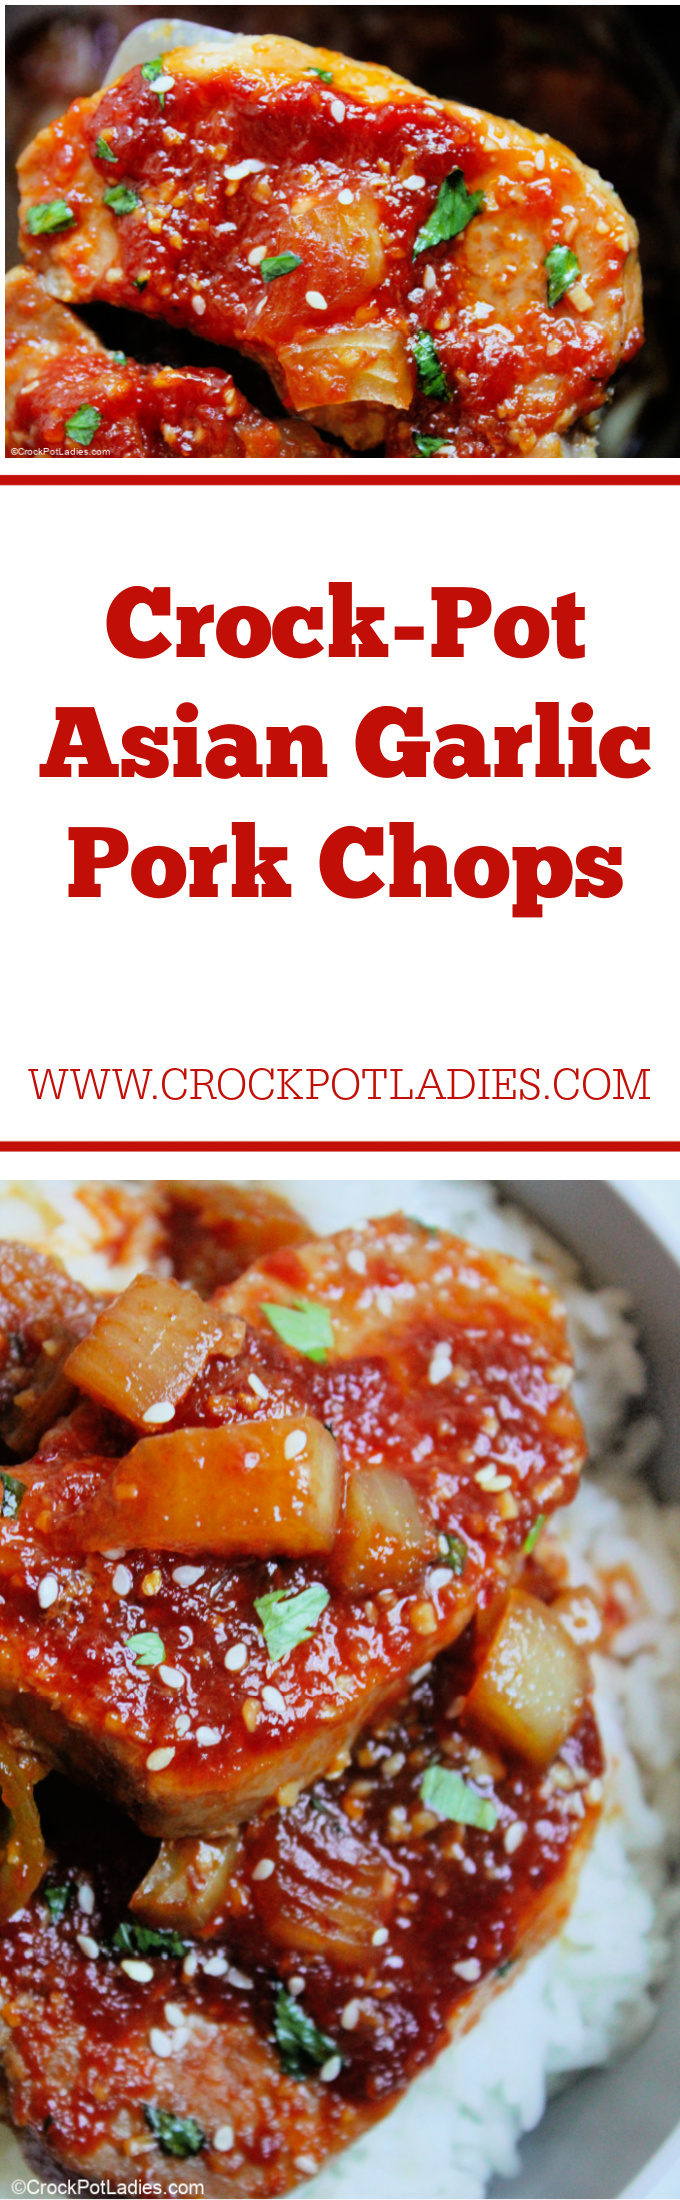 Crock-Pot Asian Garlic Pork Chops